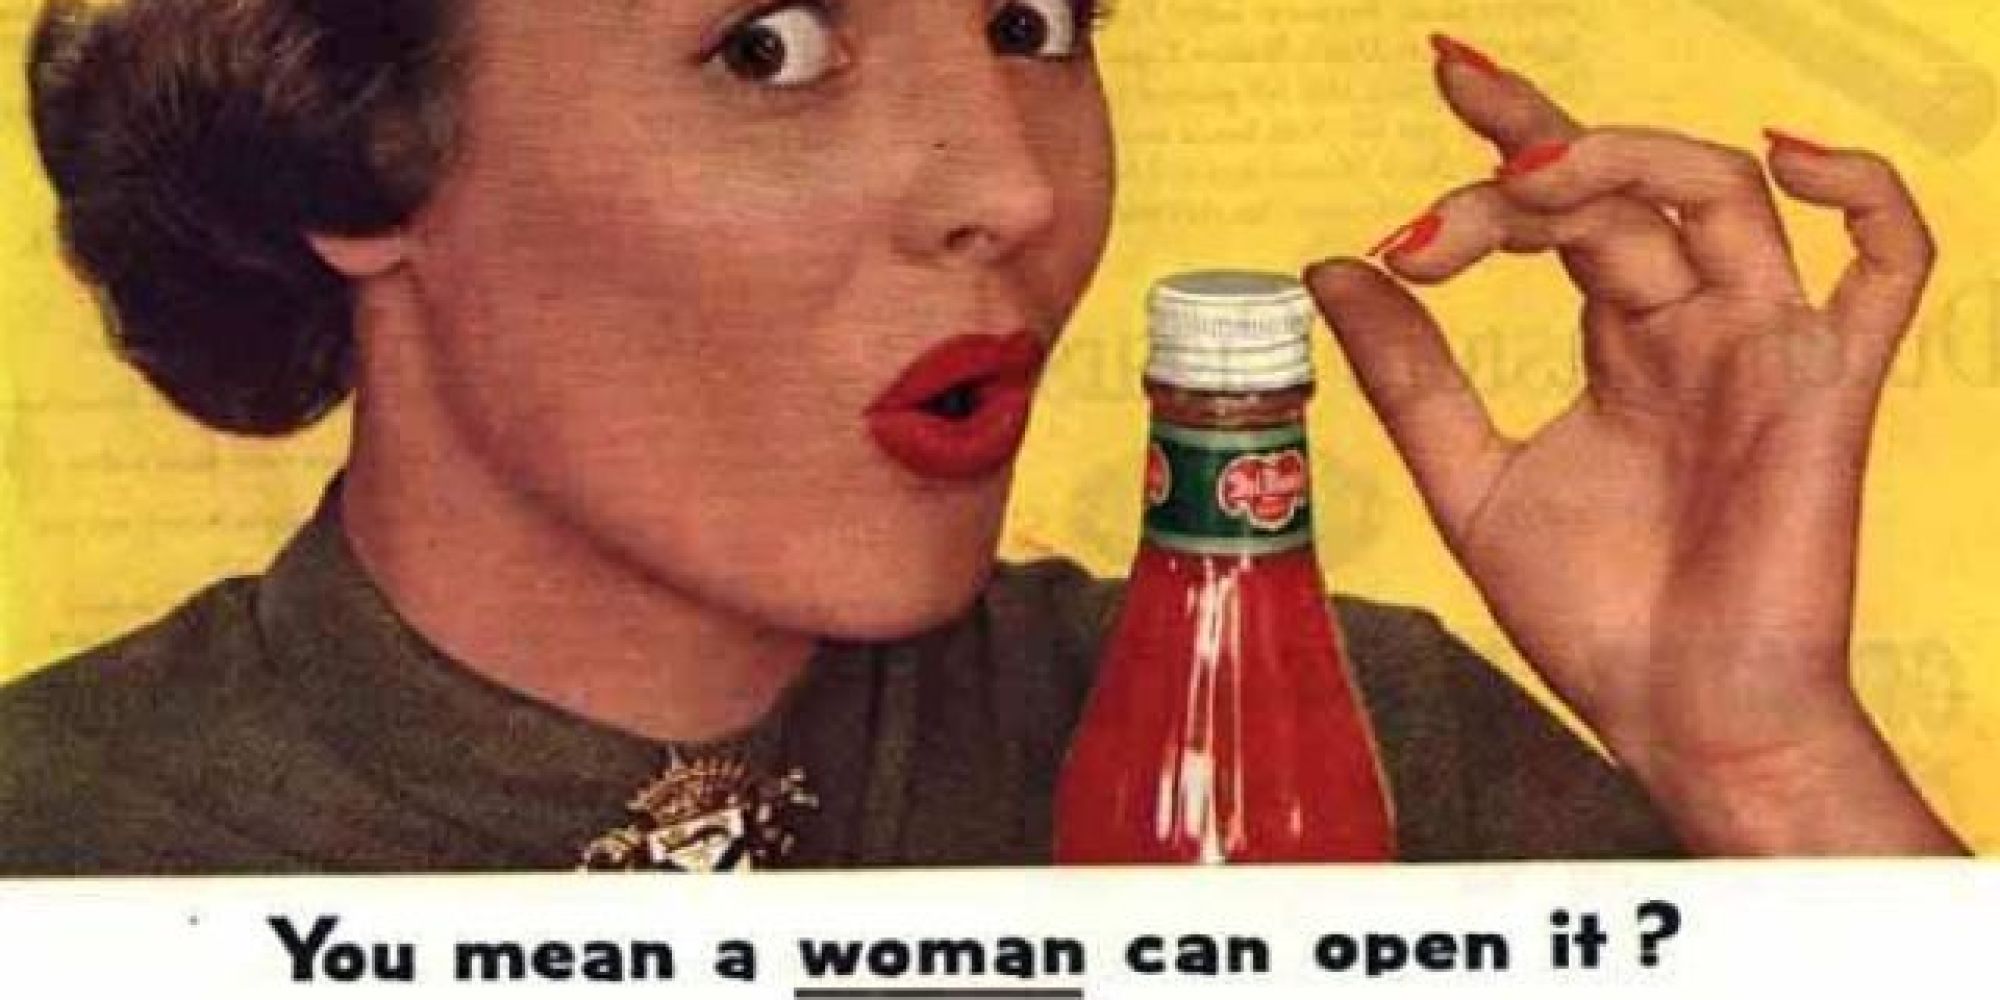 Sexism Advertisements 119